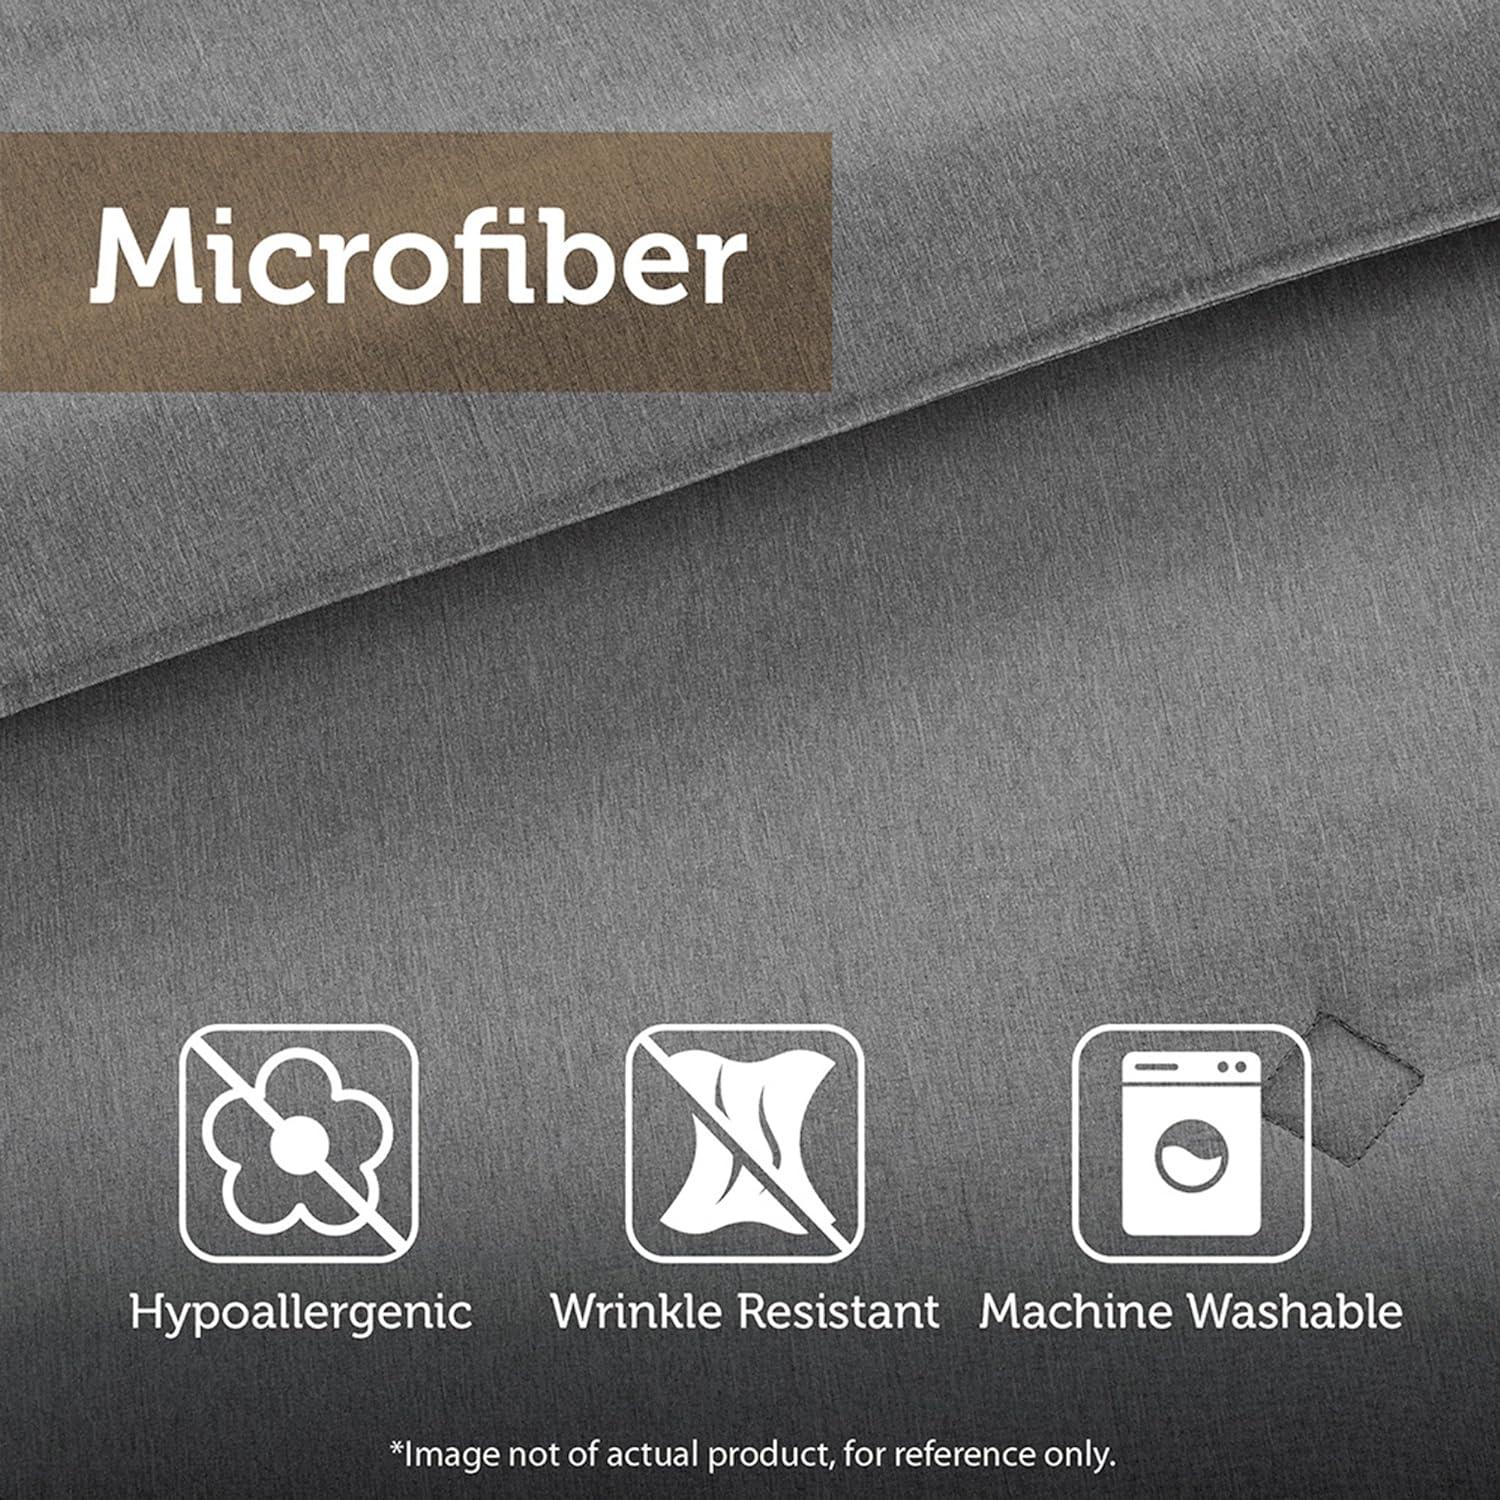 Saben Stripe Taupe King Comforter and Sheet Set in Ultra-Soft Microfiber